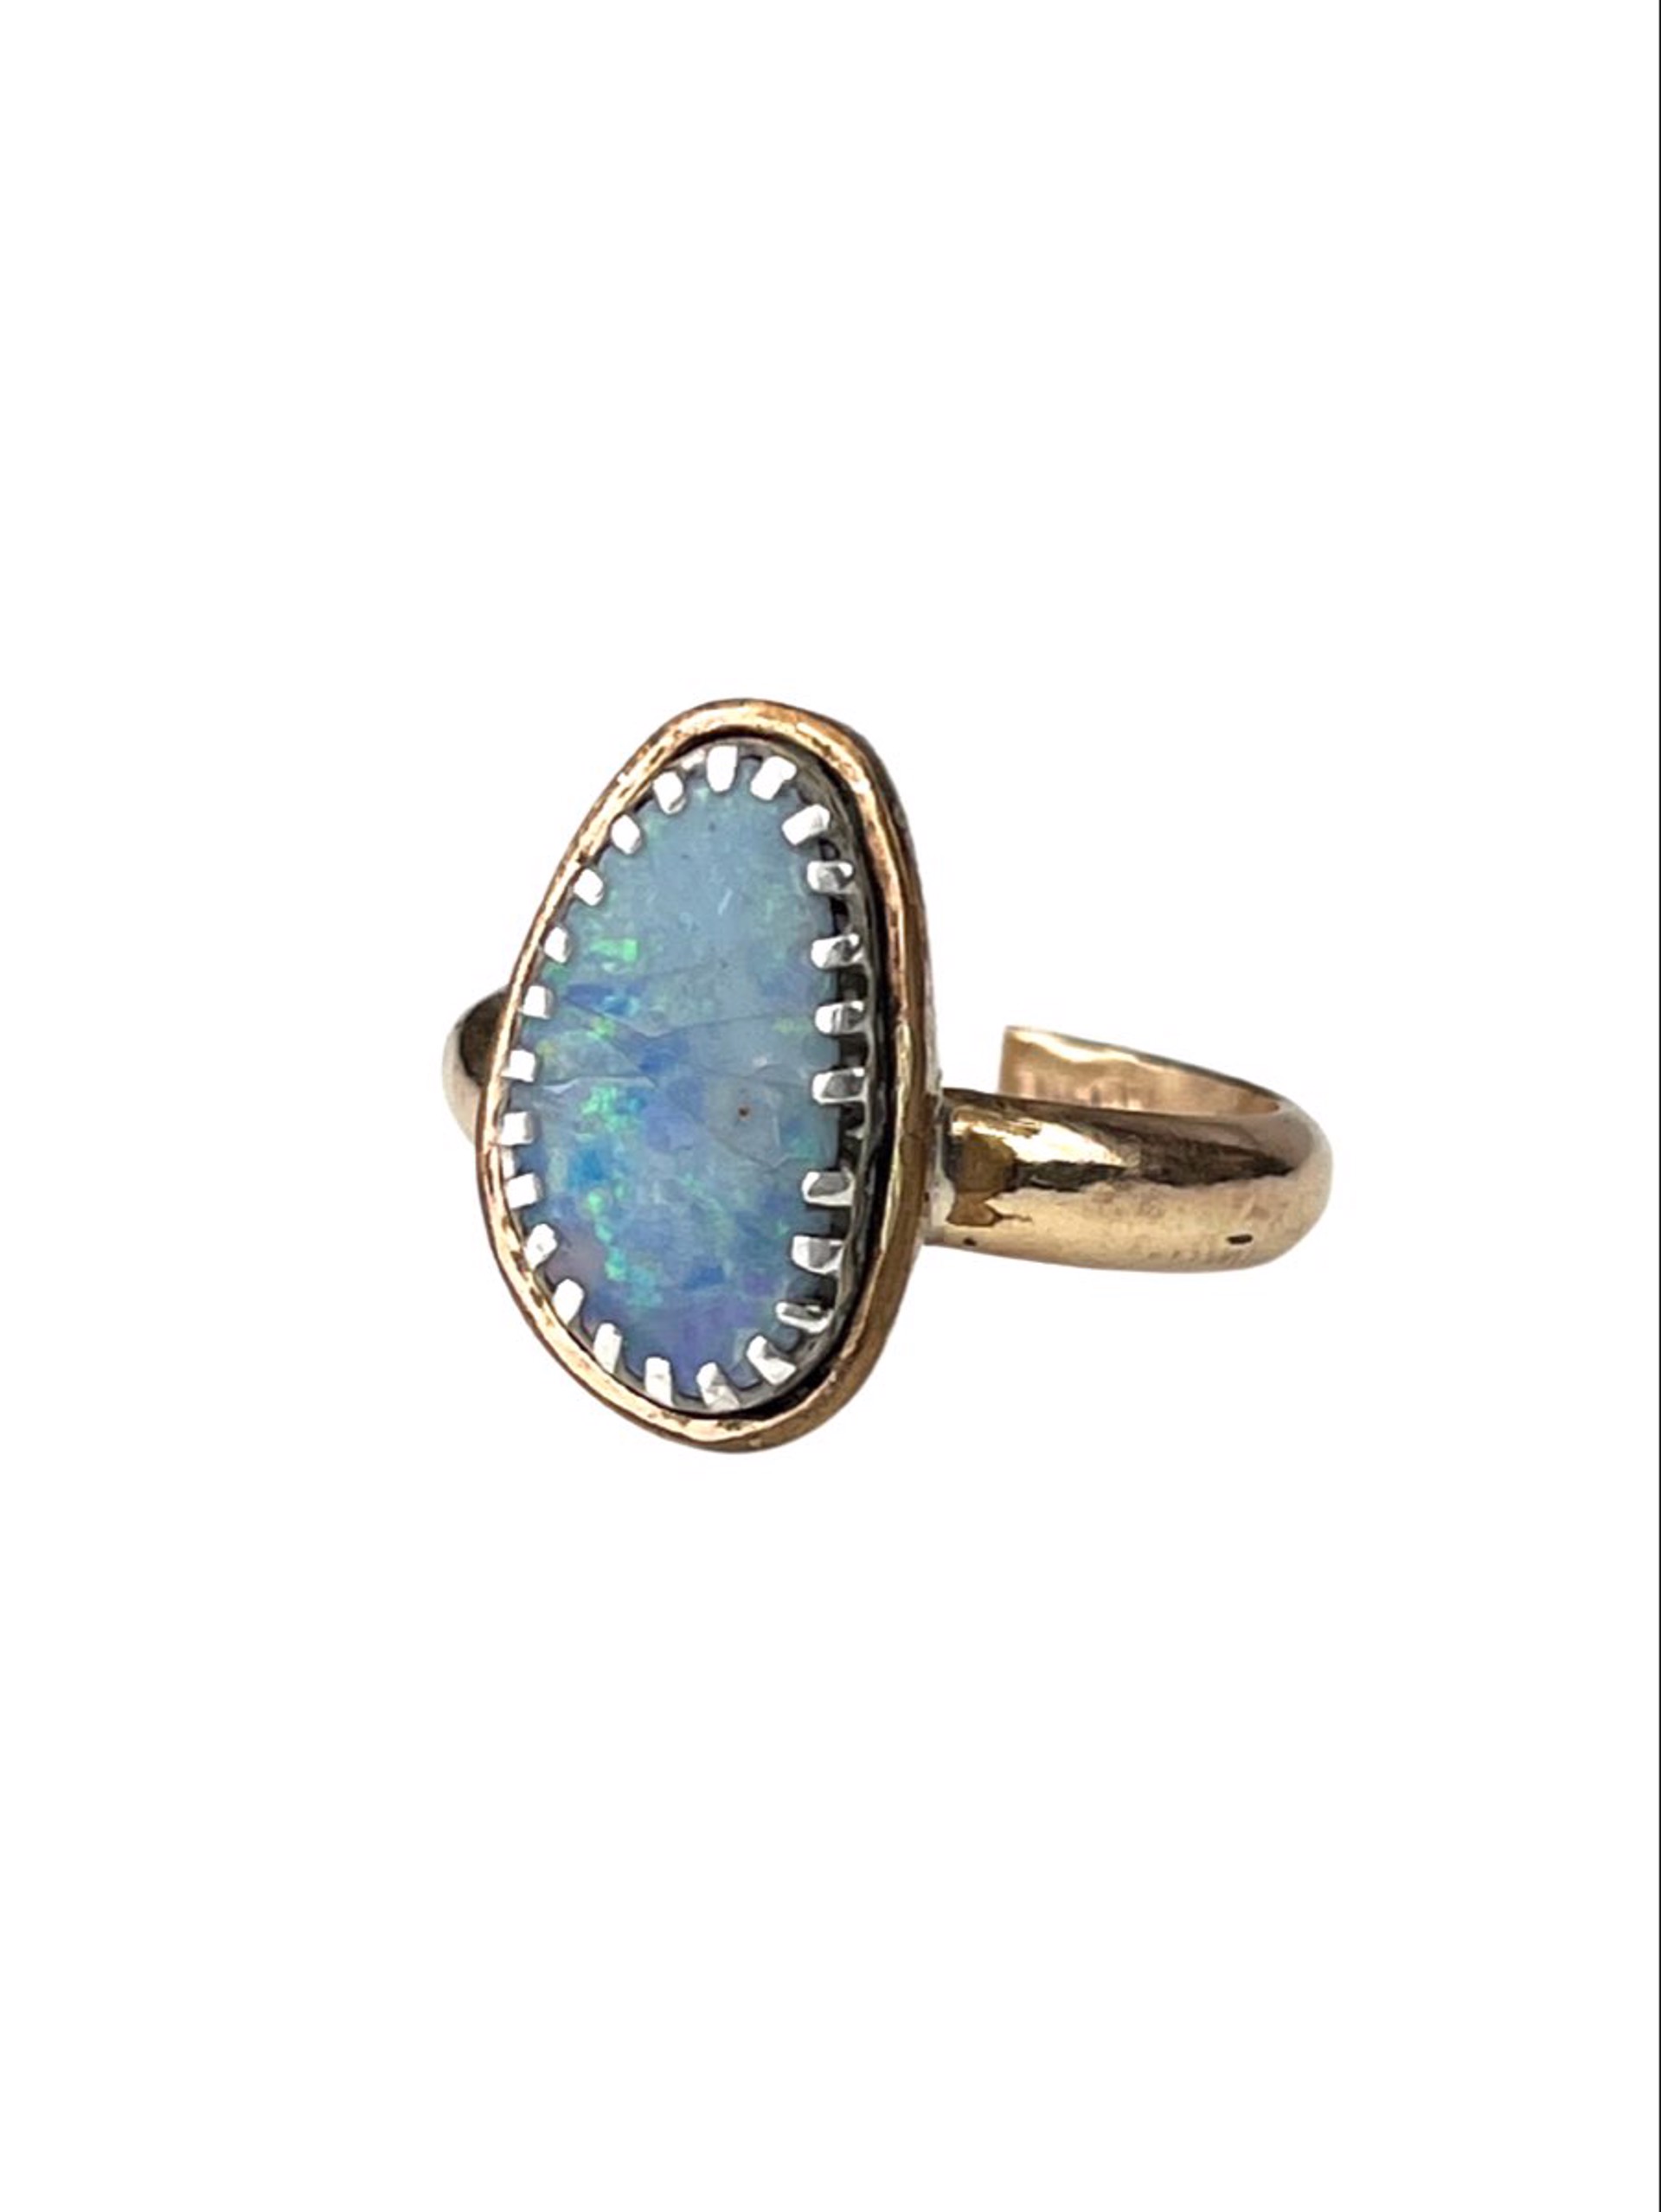 Australian Opal Ring by Nola Smodic